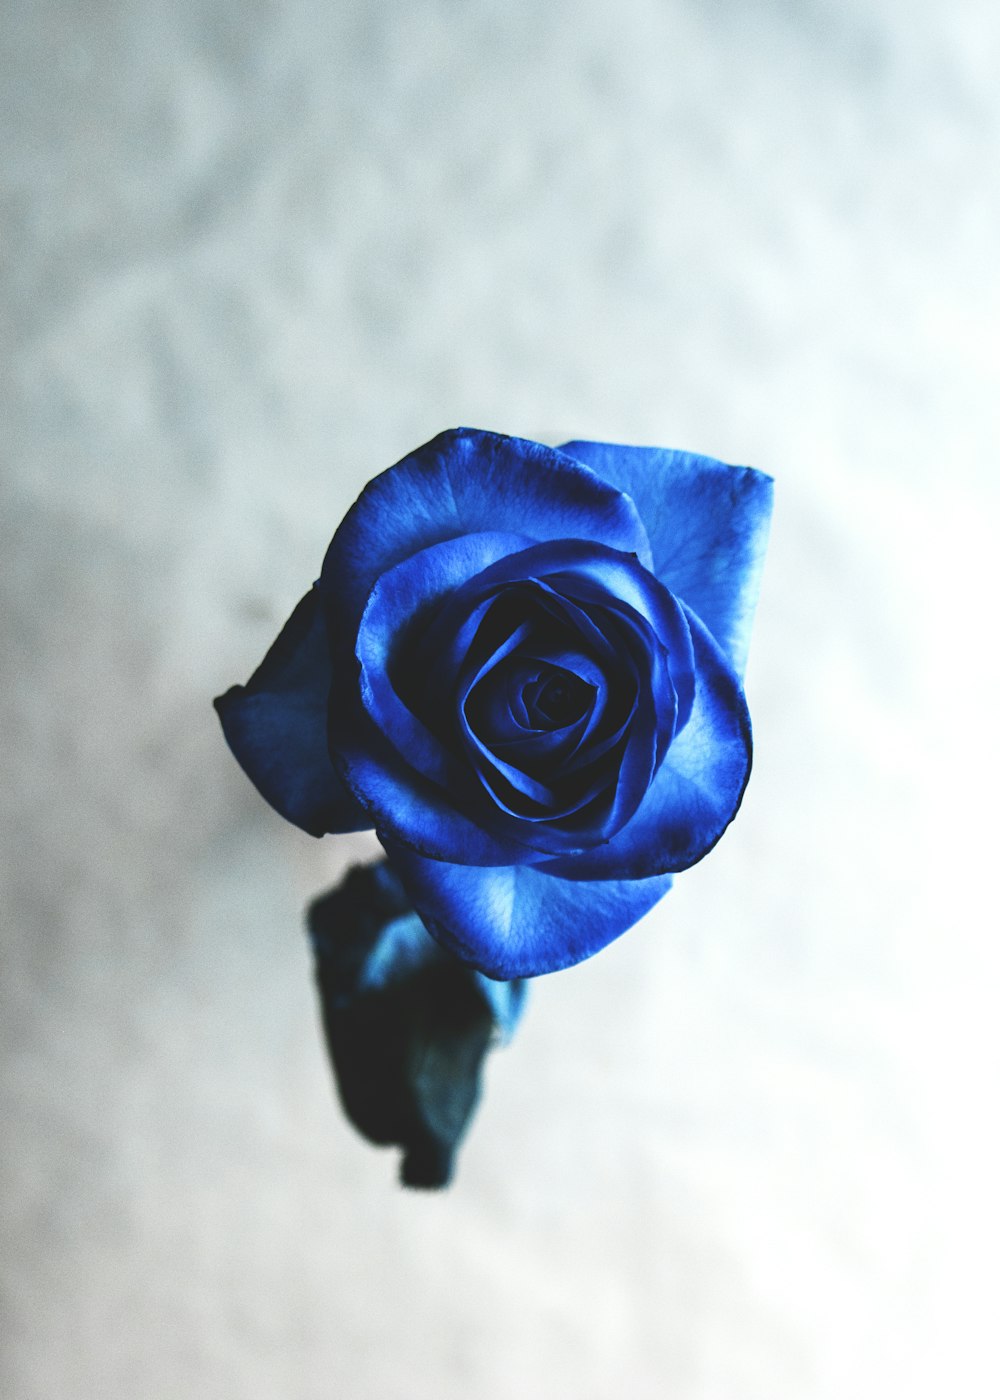 1000+ Blue Rose Pictures | Download Free Images on Unsplash